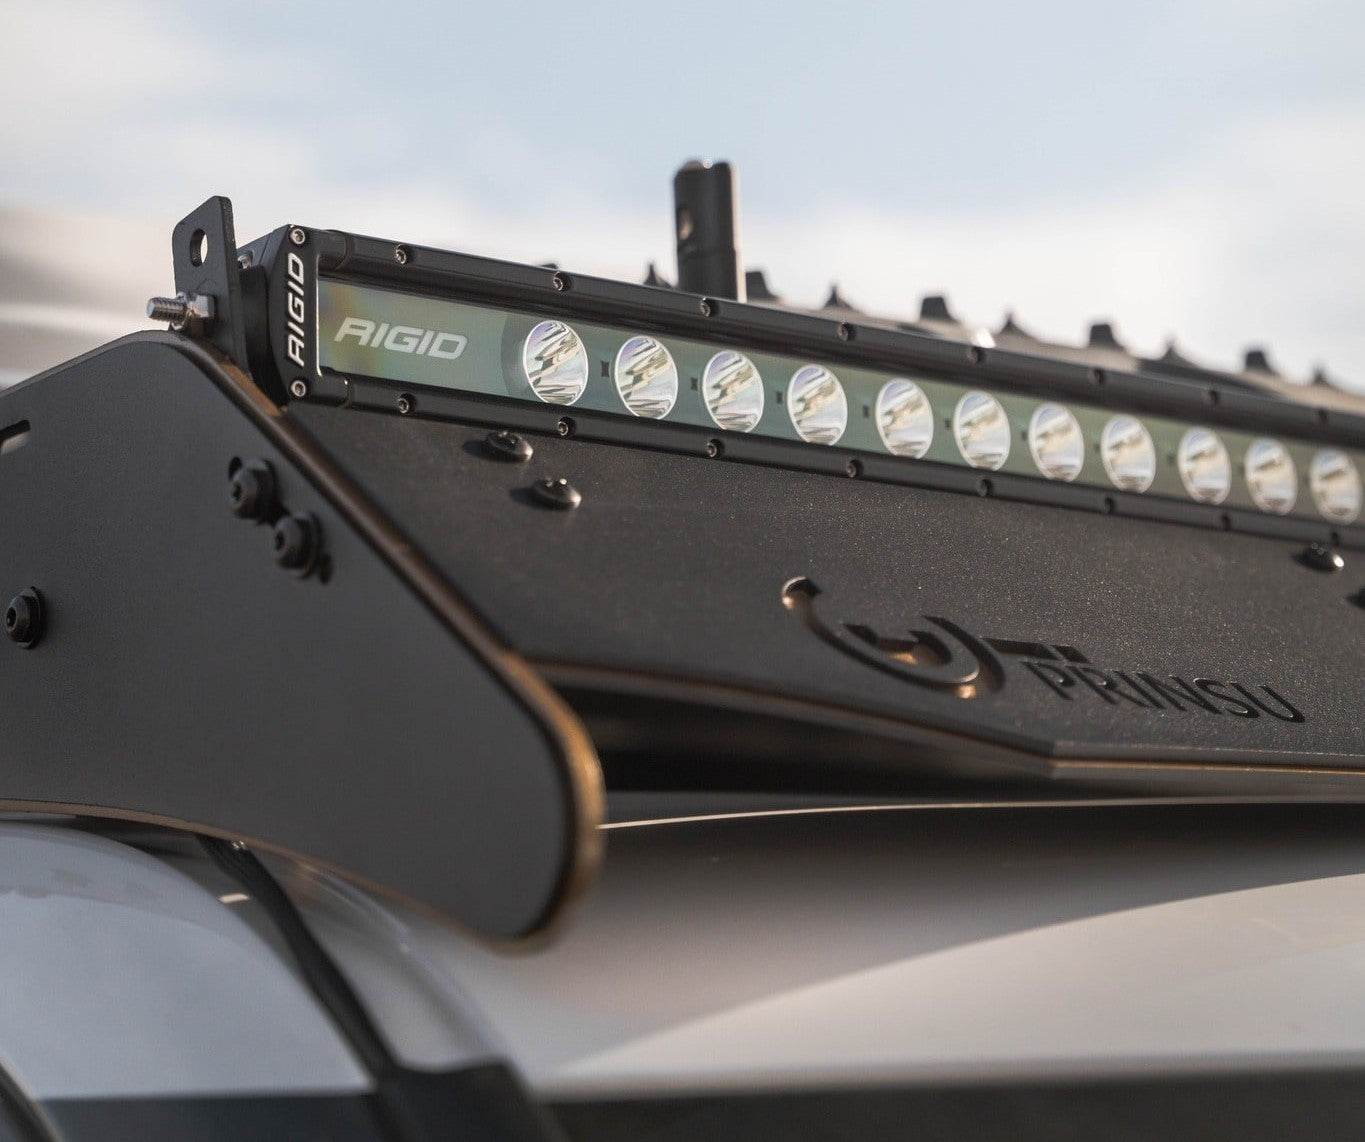 Prinsu roof rack with a light bar mounted using the Prinsu light bar mount